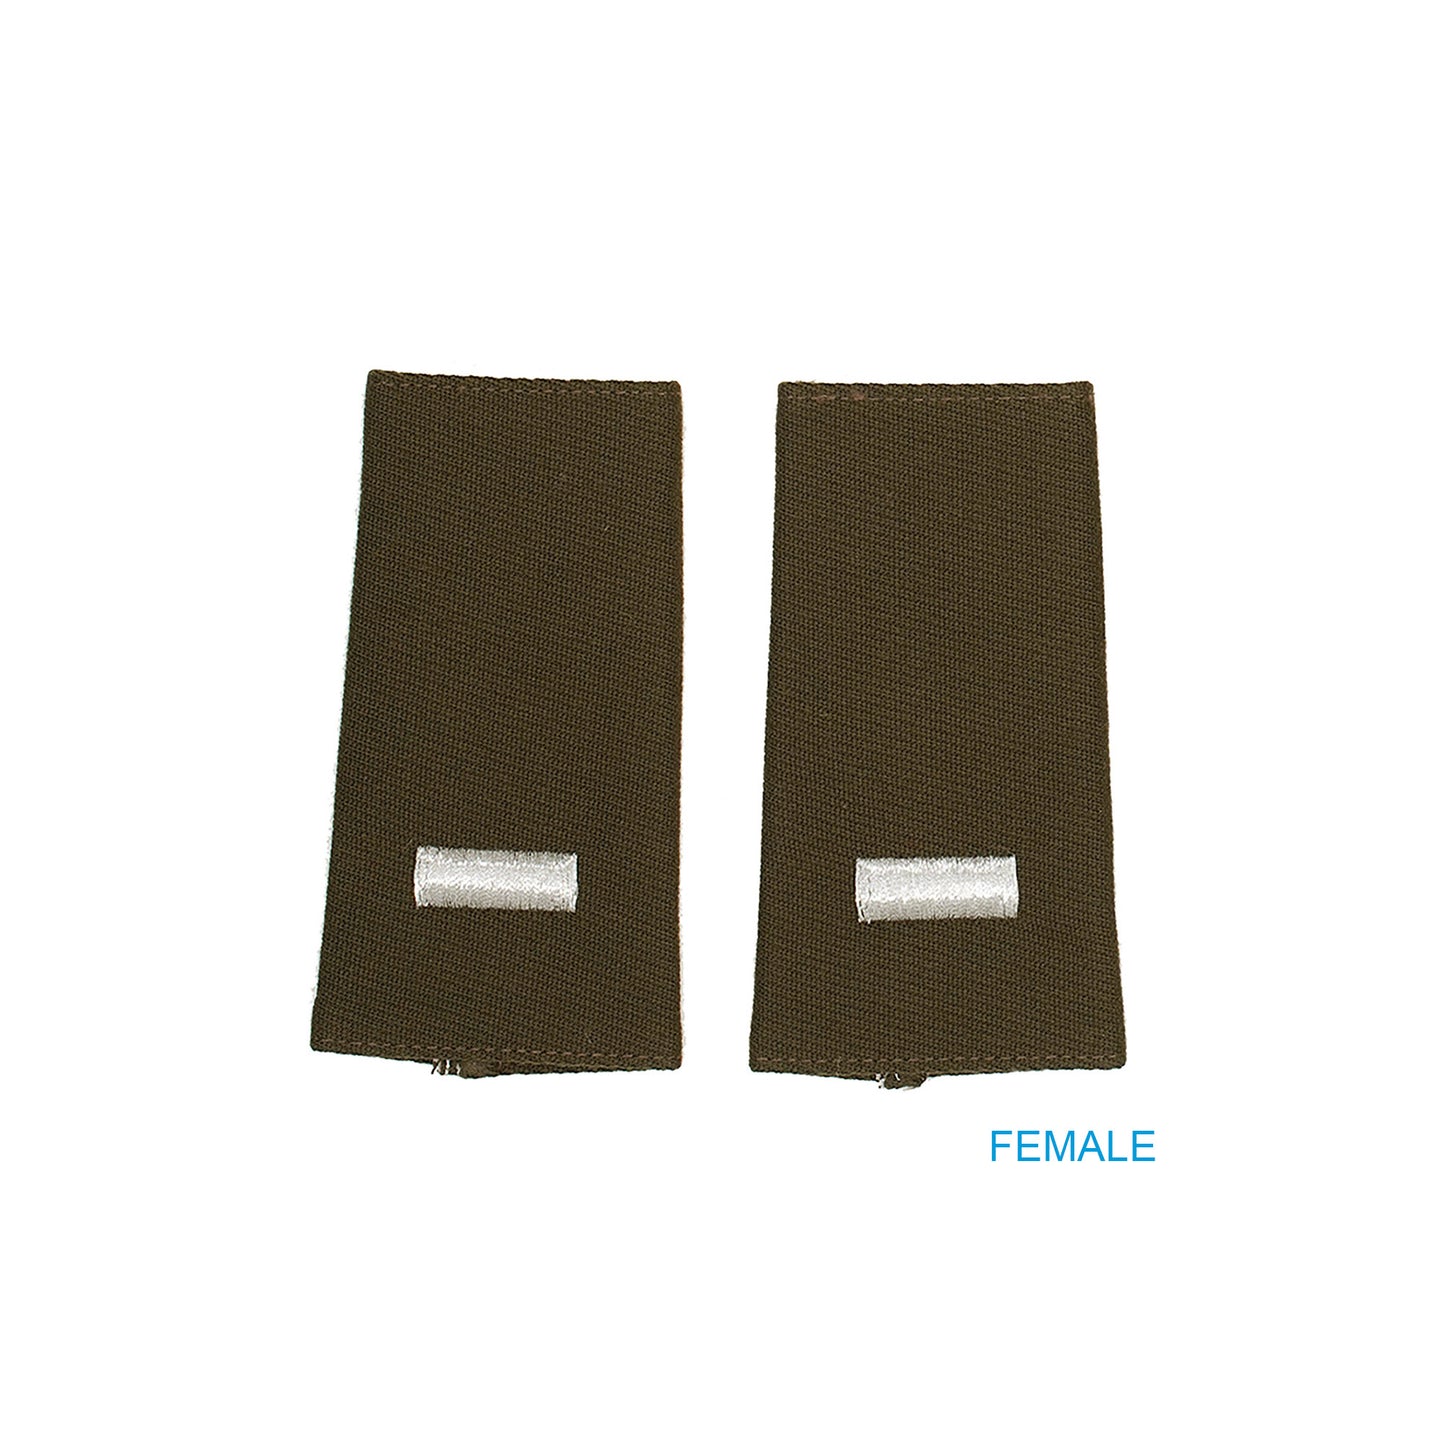 U.S. Army AGSU O2 1st LT Epaulets (female)